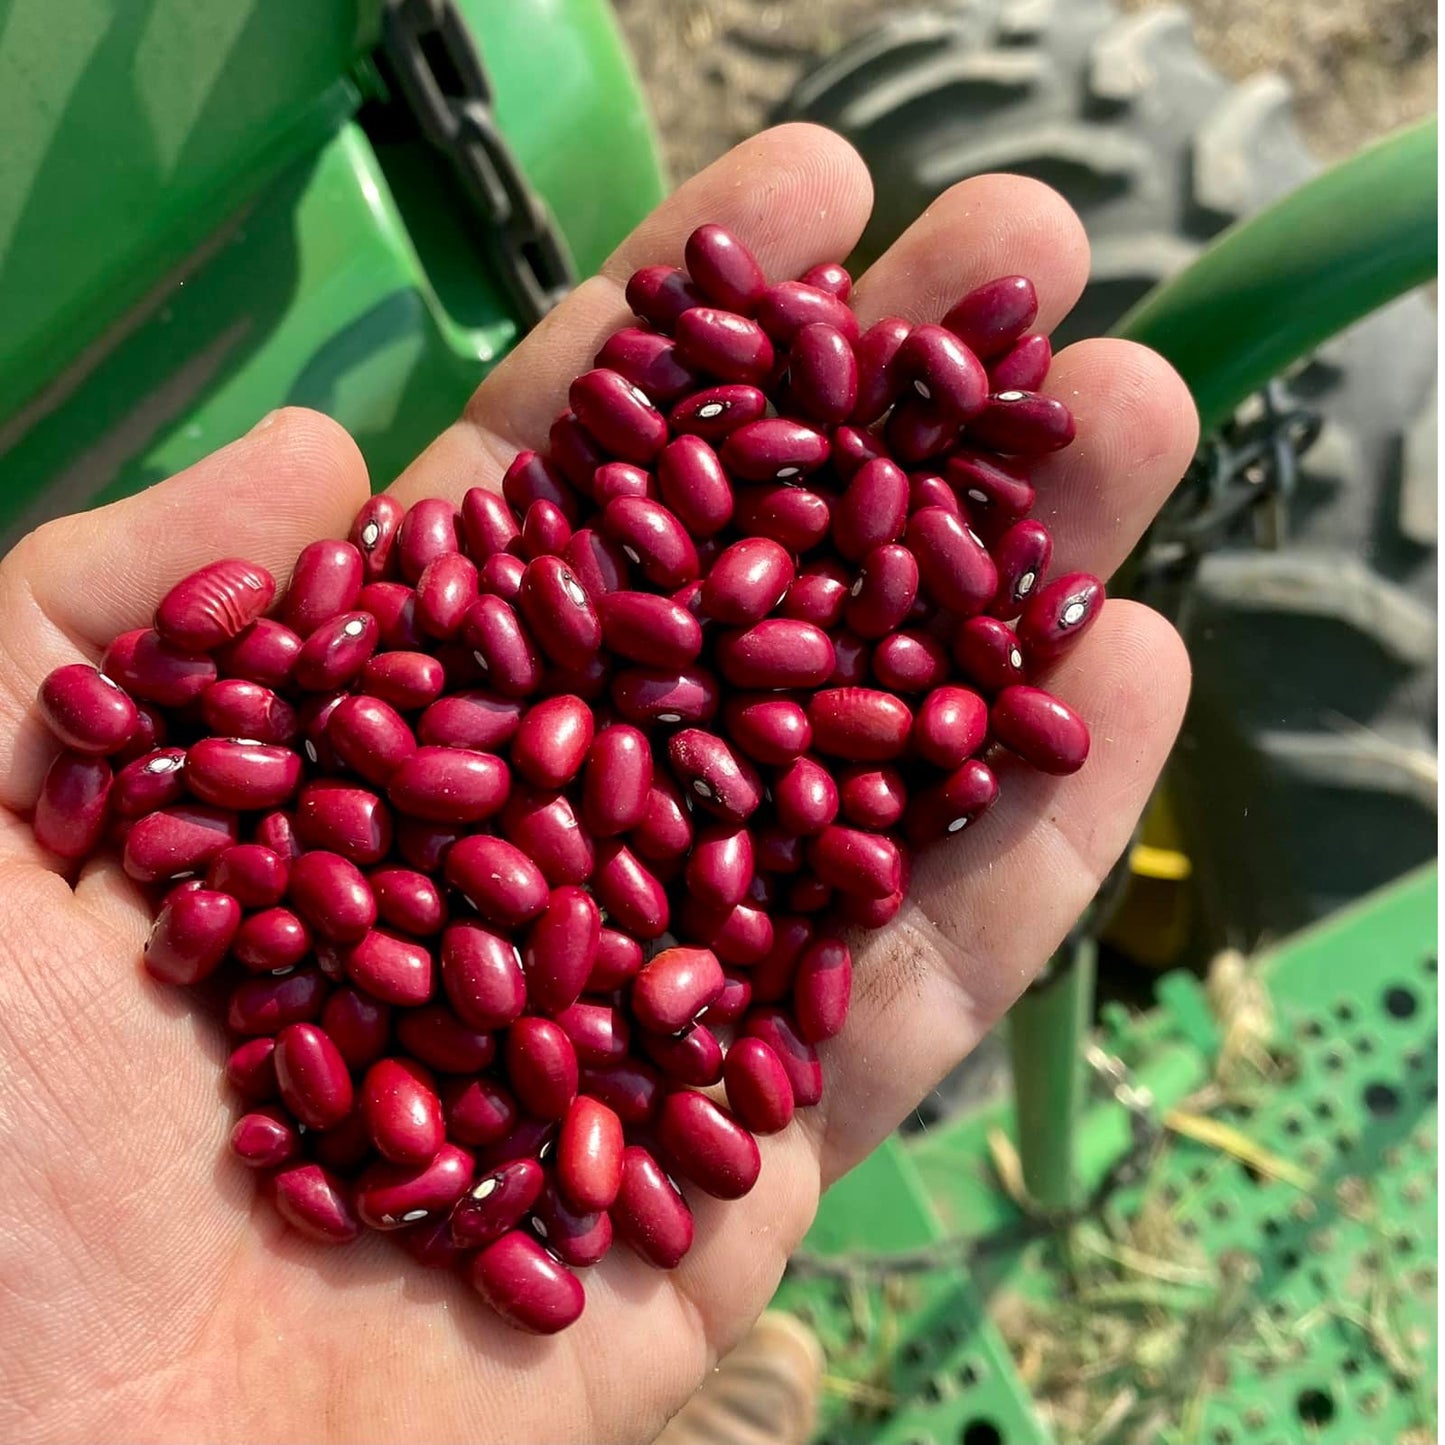 Red Beans // Michigan Grown, USDA Organic Certified, Non-GMO